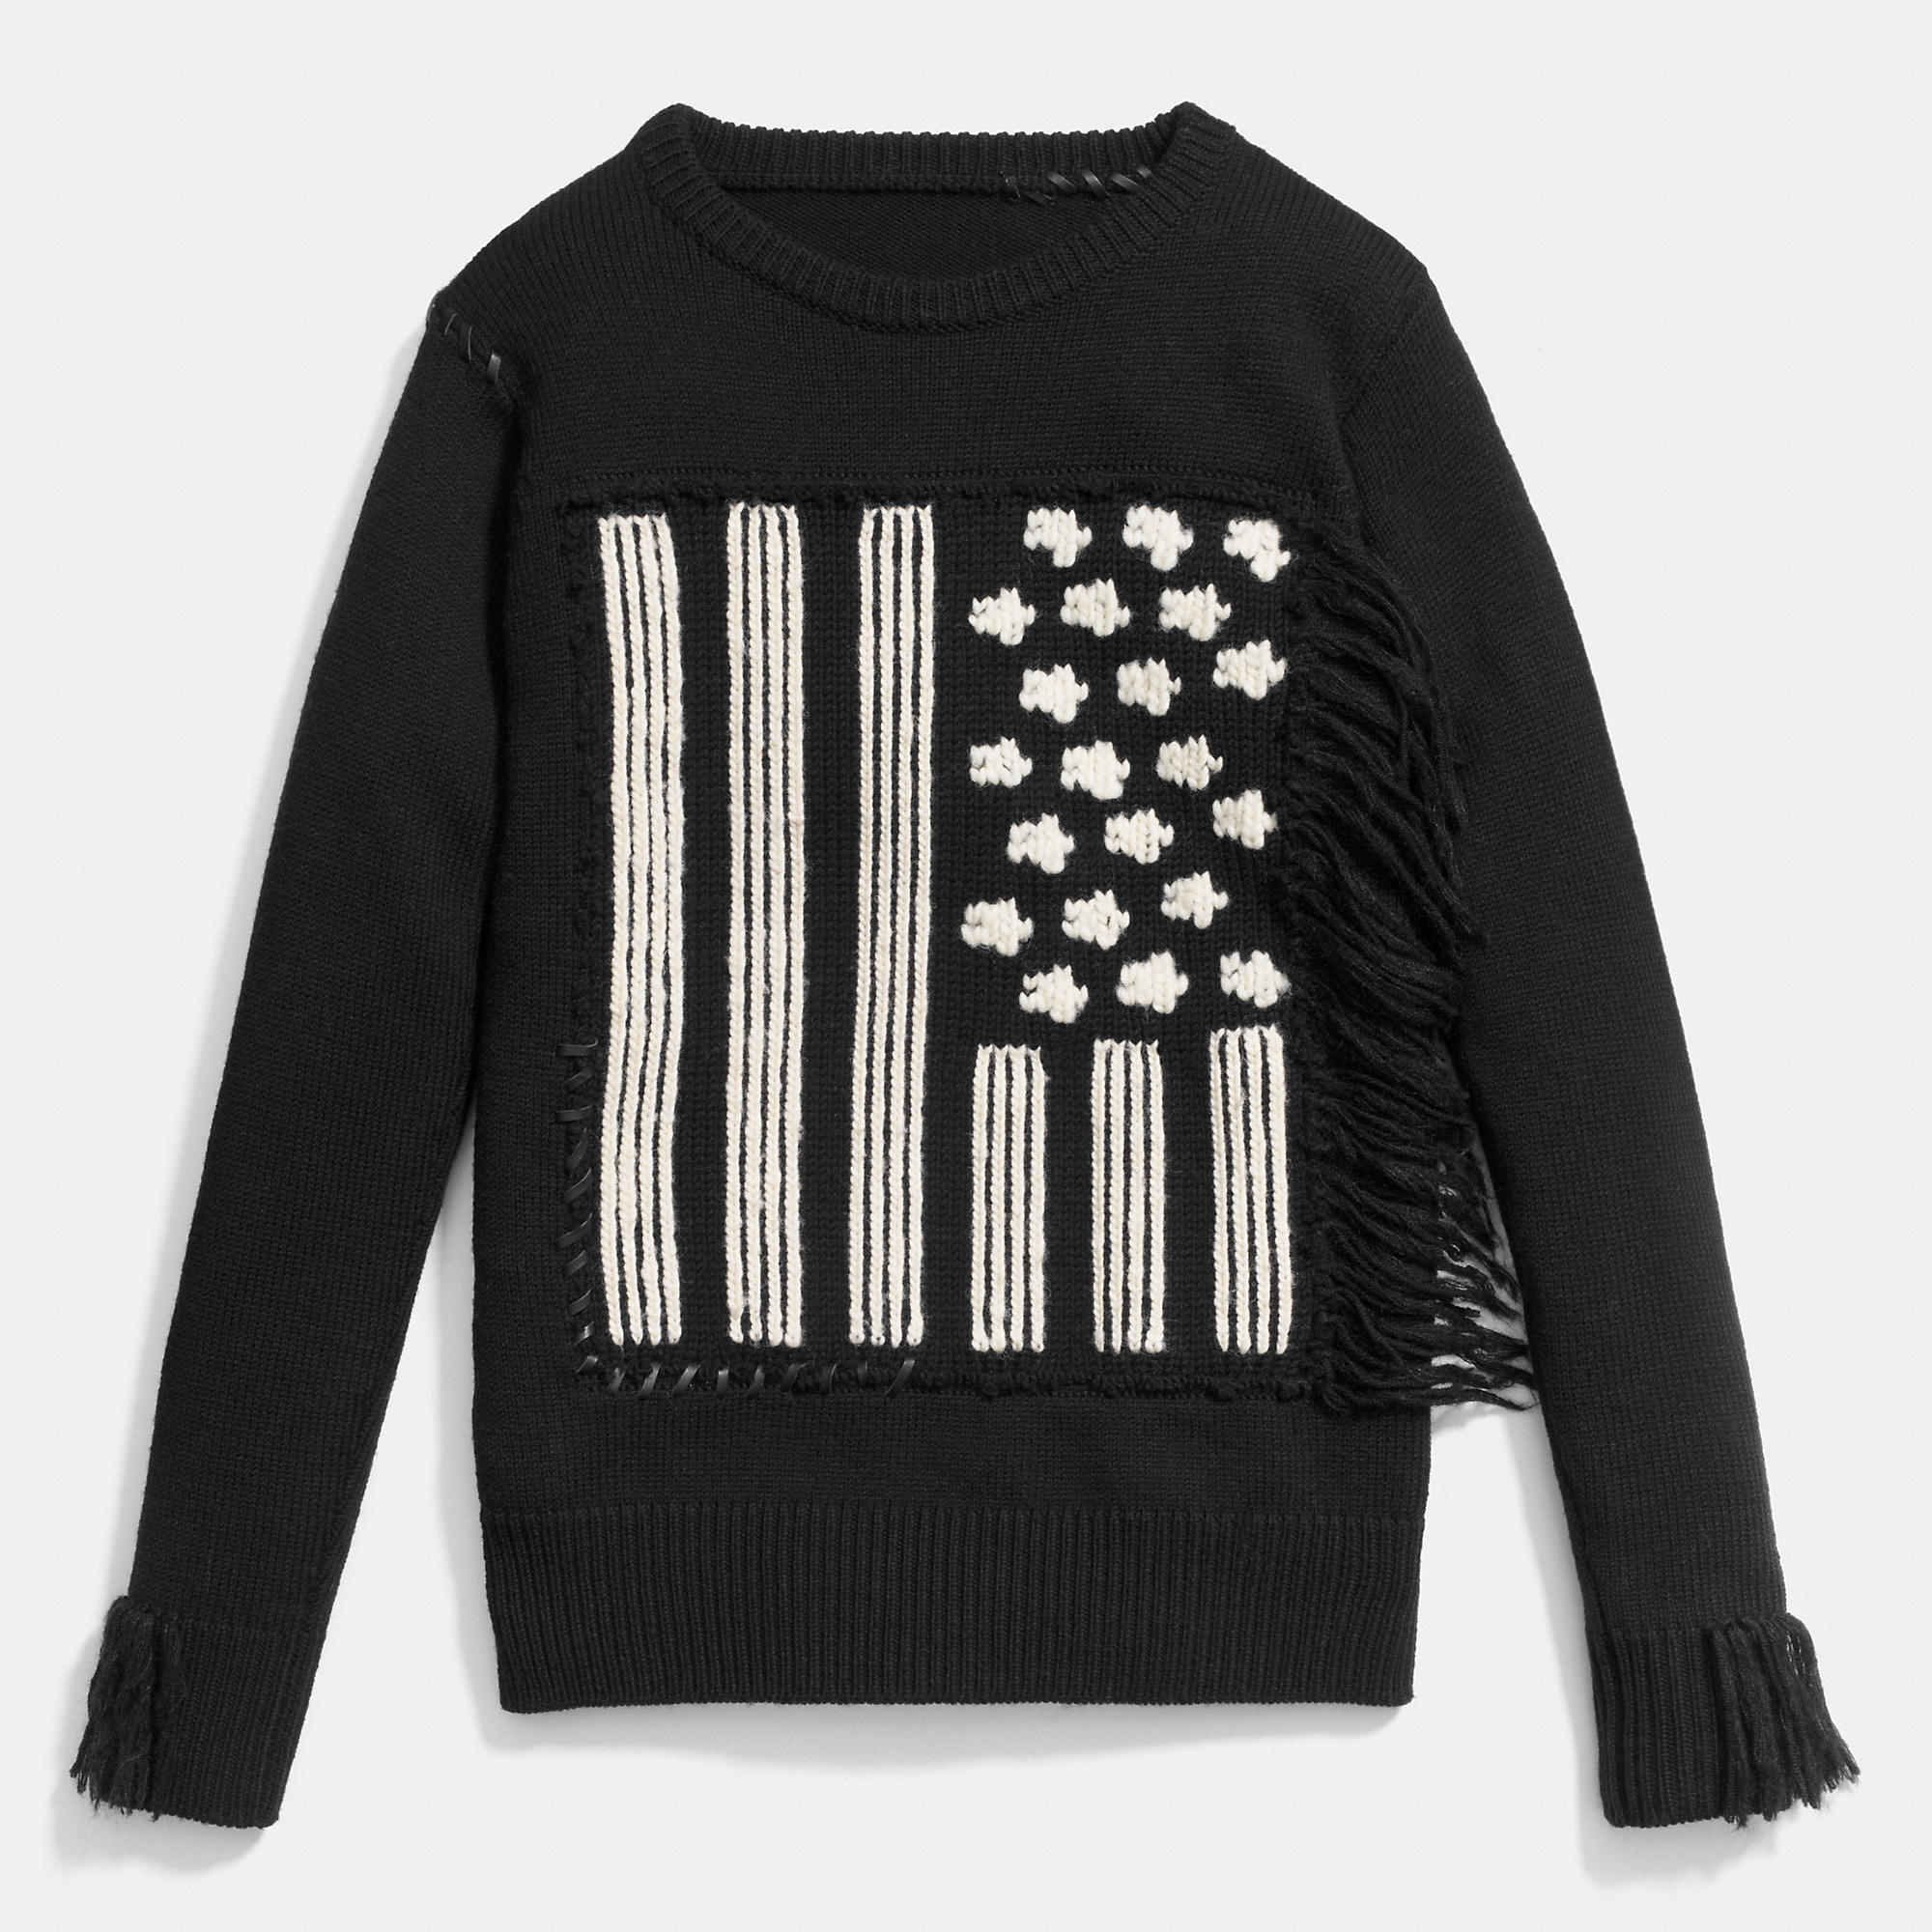 COACH Wool Flag Intarsia Sweater in Black - Lyst